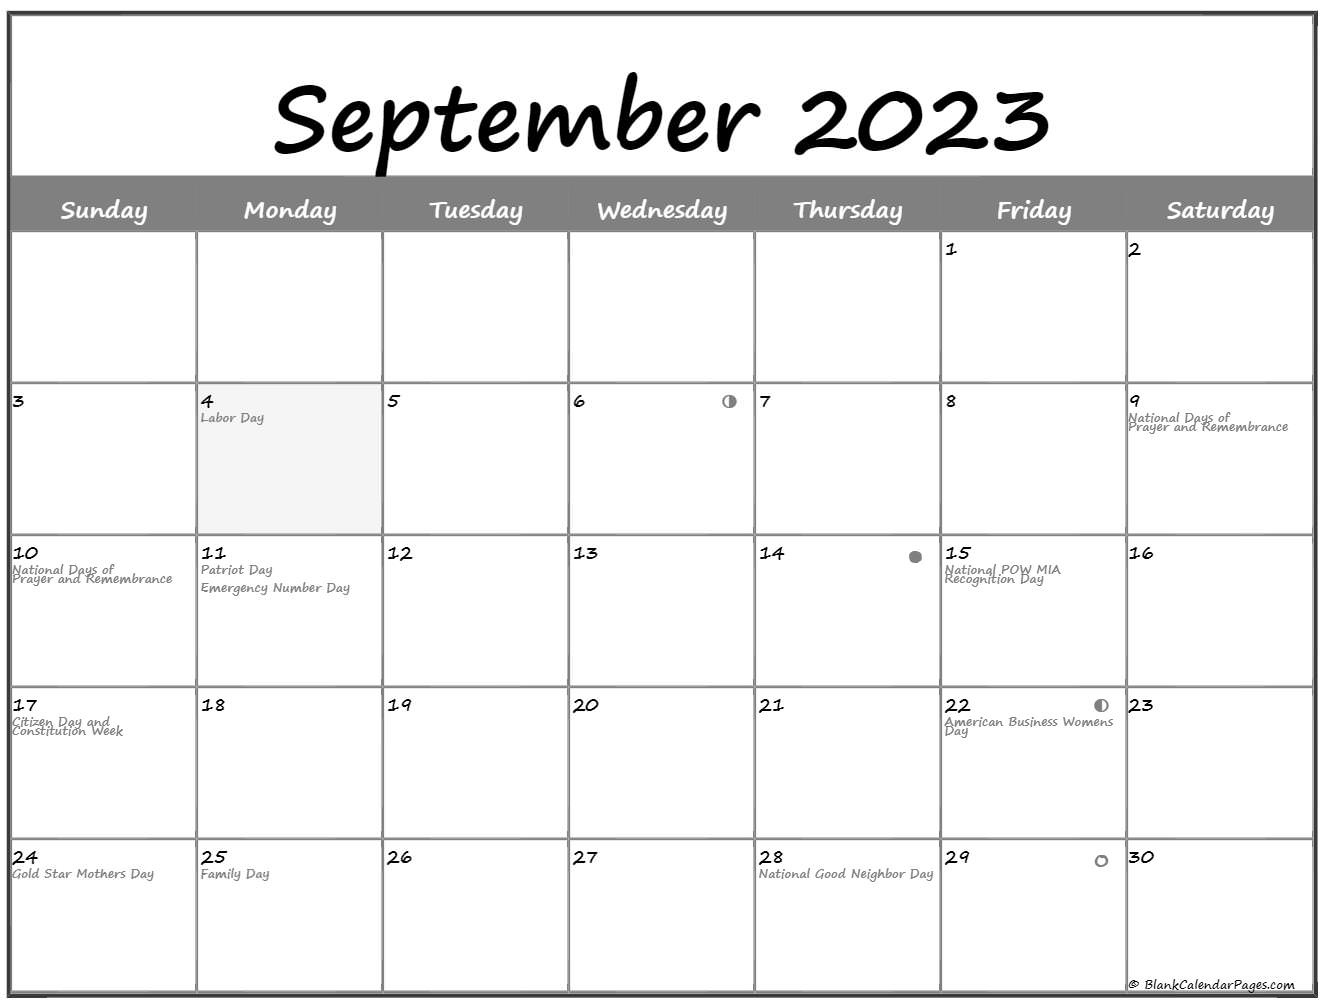 september-2023-lunar-calendar-moon-phase-calendar